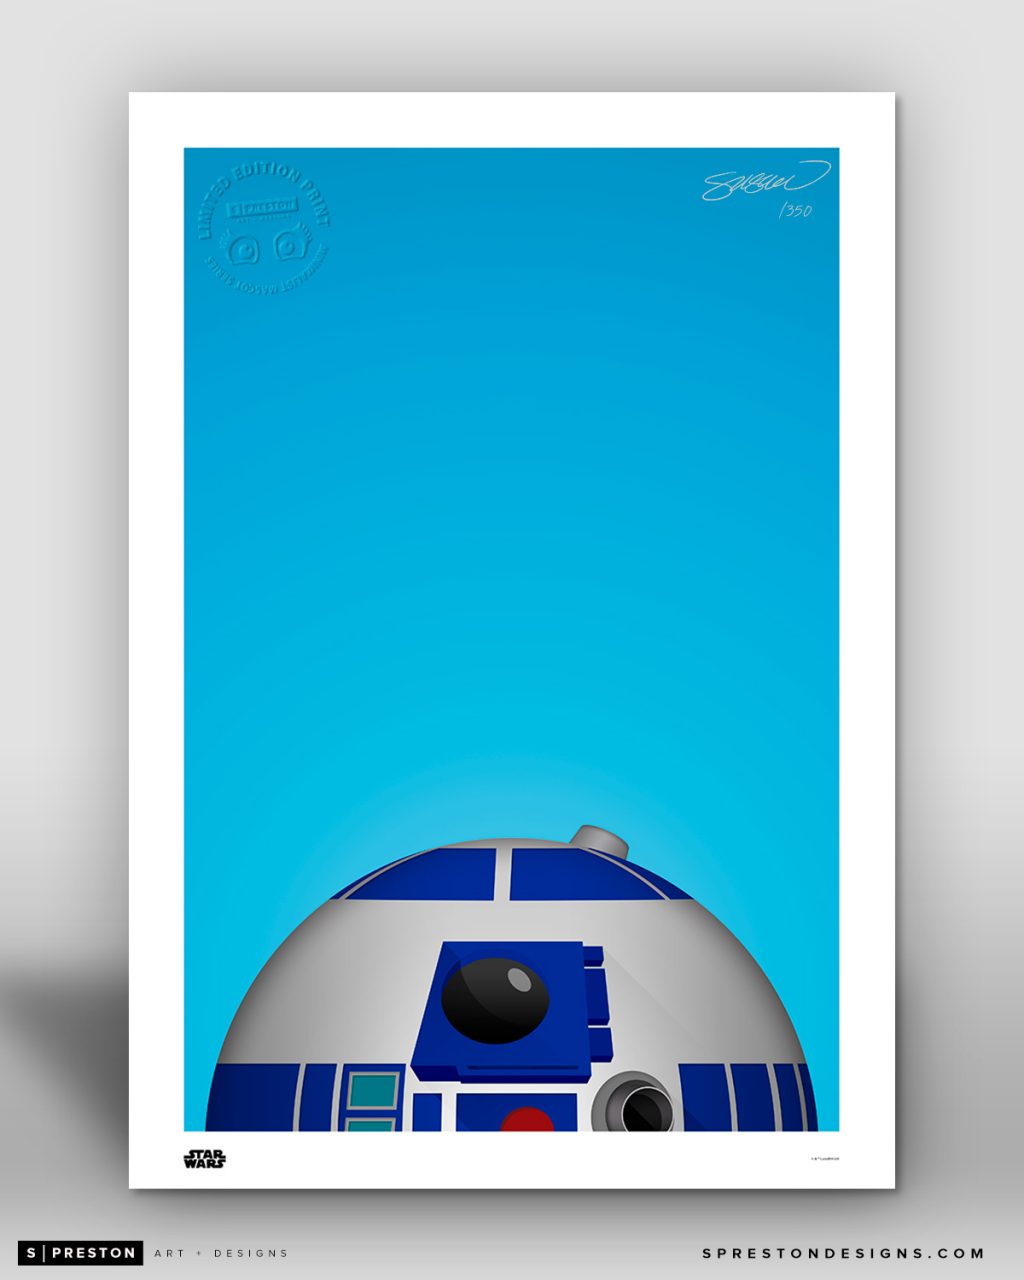 R2-D2 print (S.Preston)